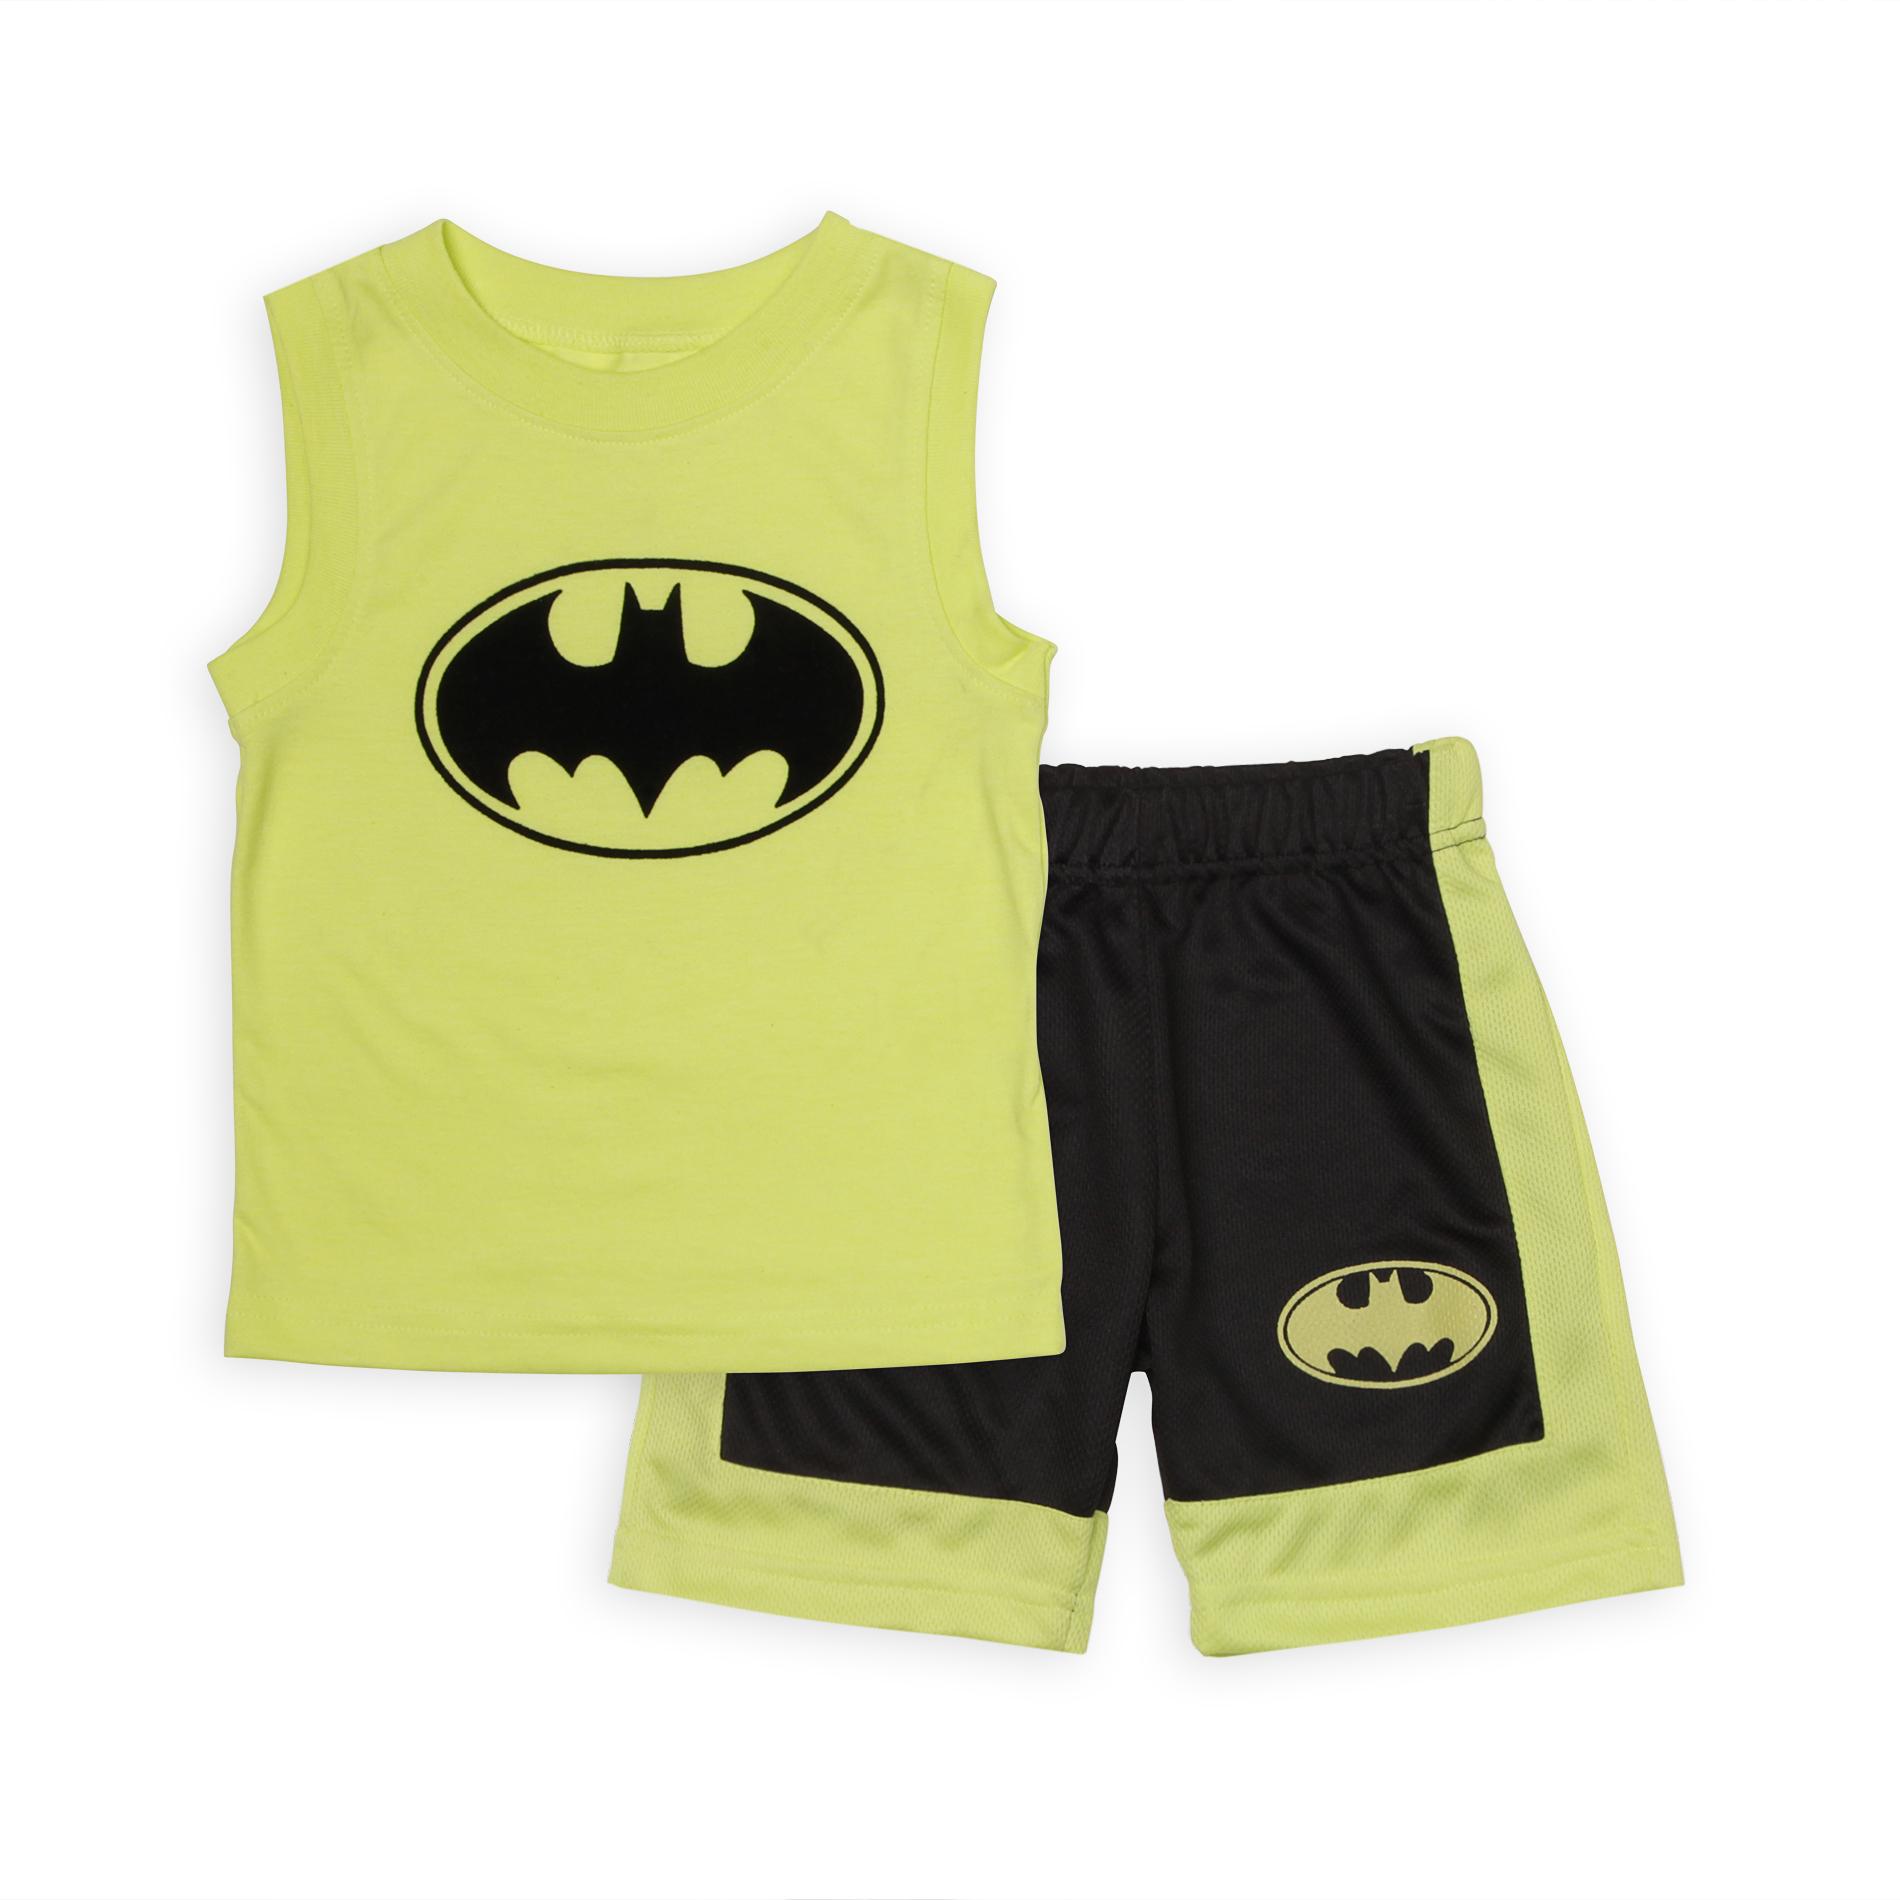 DC Comics Toddler Boy's Tank Top & Shorts - Batman